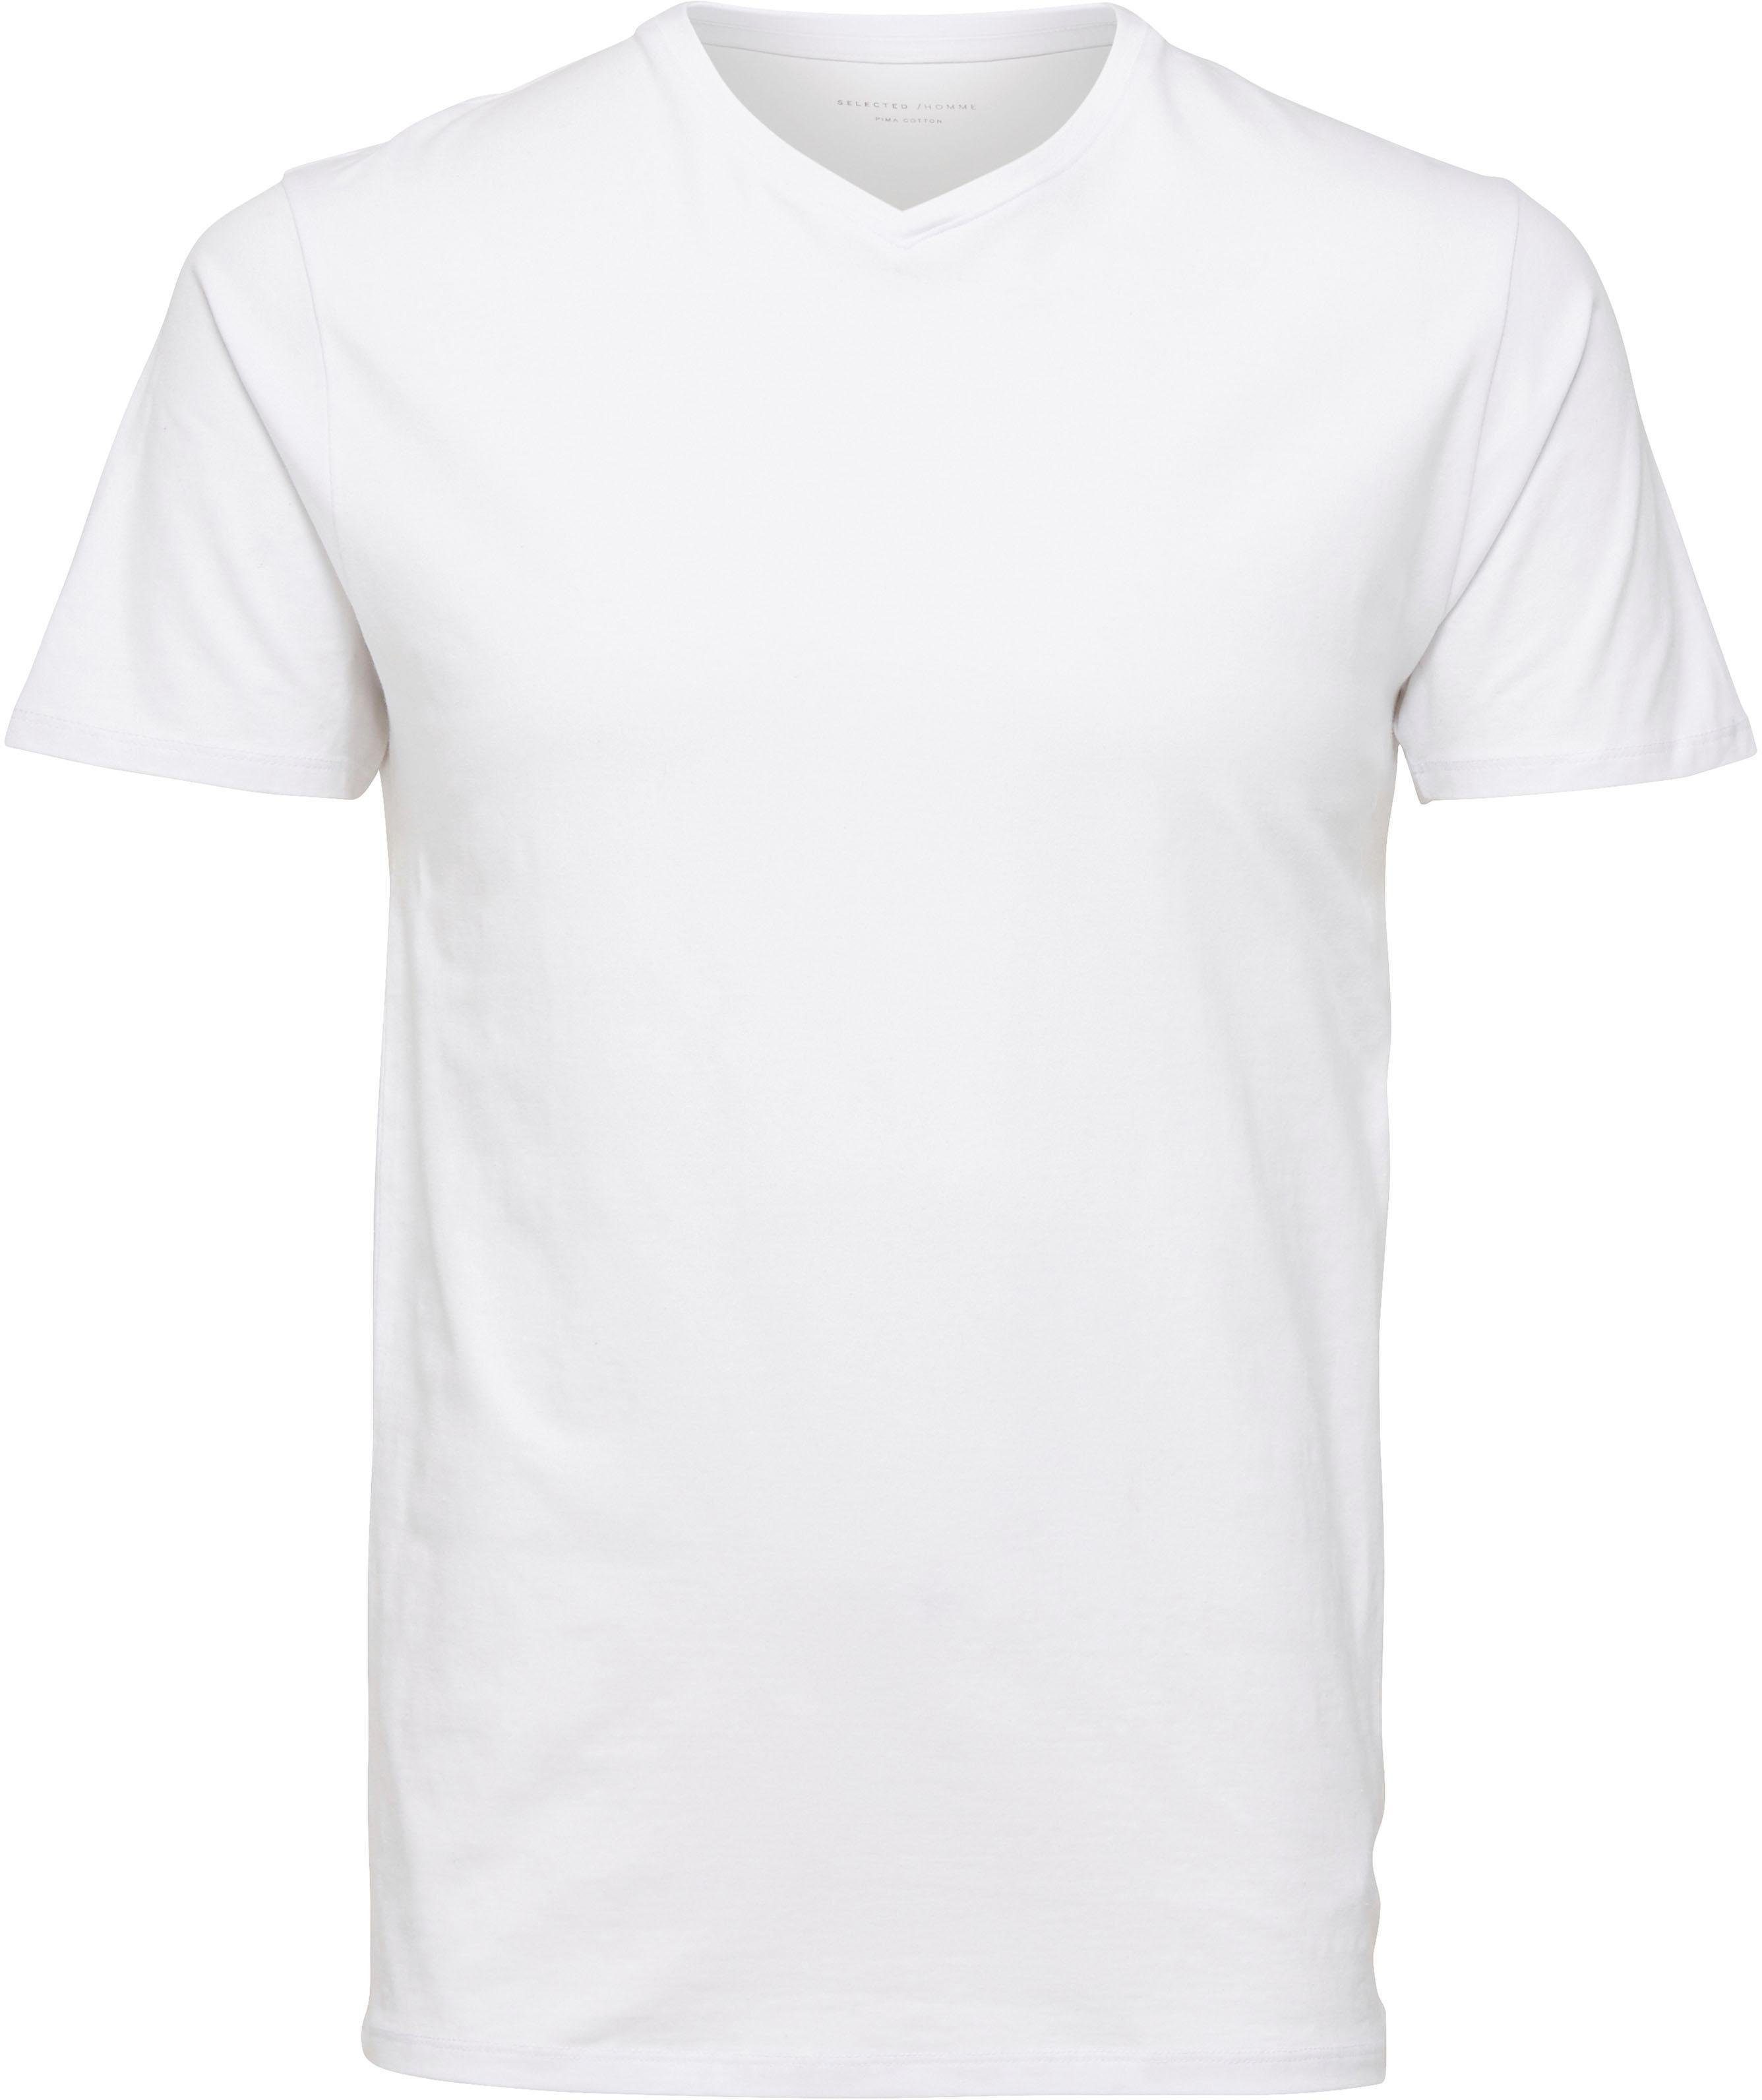 SELECTED HOMME V-Shirt Basic V-Shirt, Perfekte Passform durch den  Elasthananteil